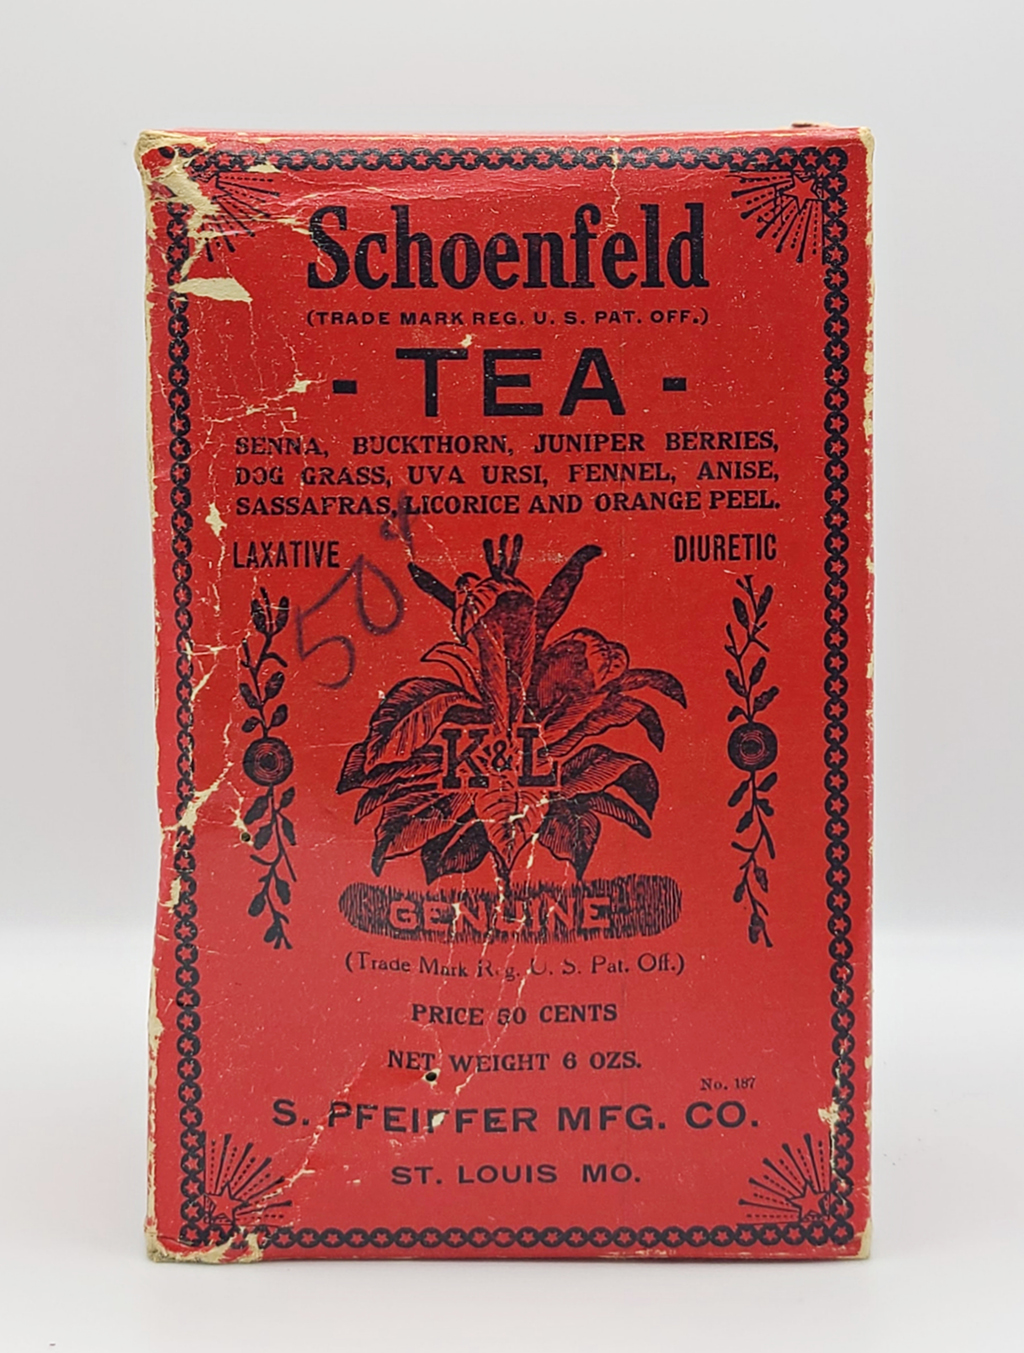 A red box displays the label "Schoenfeld tea"